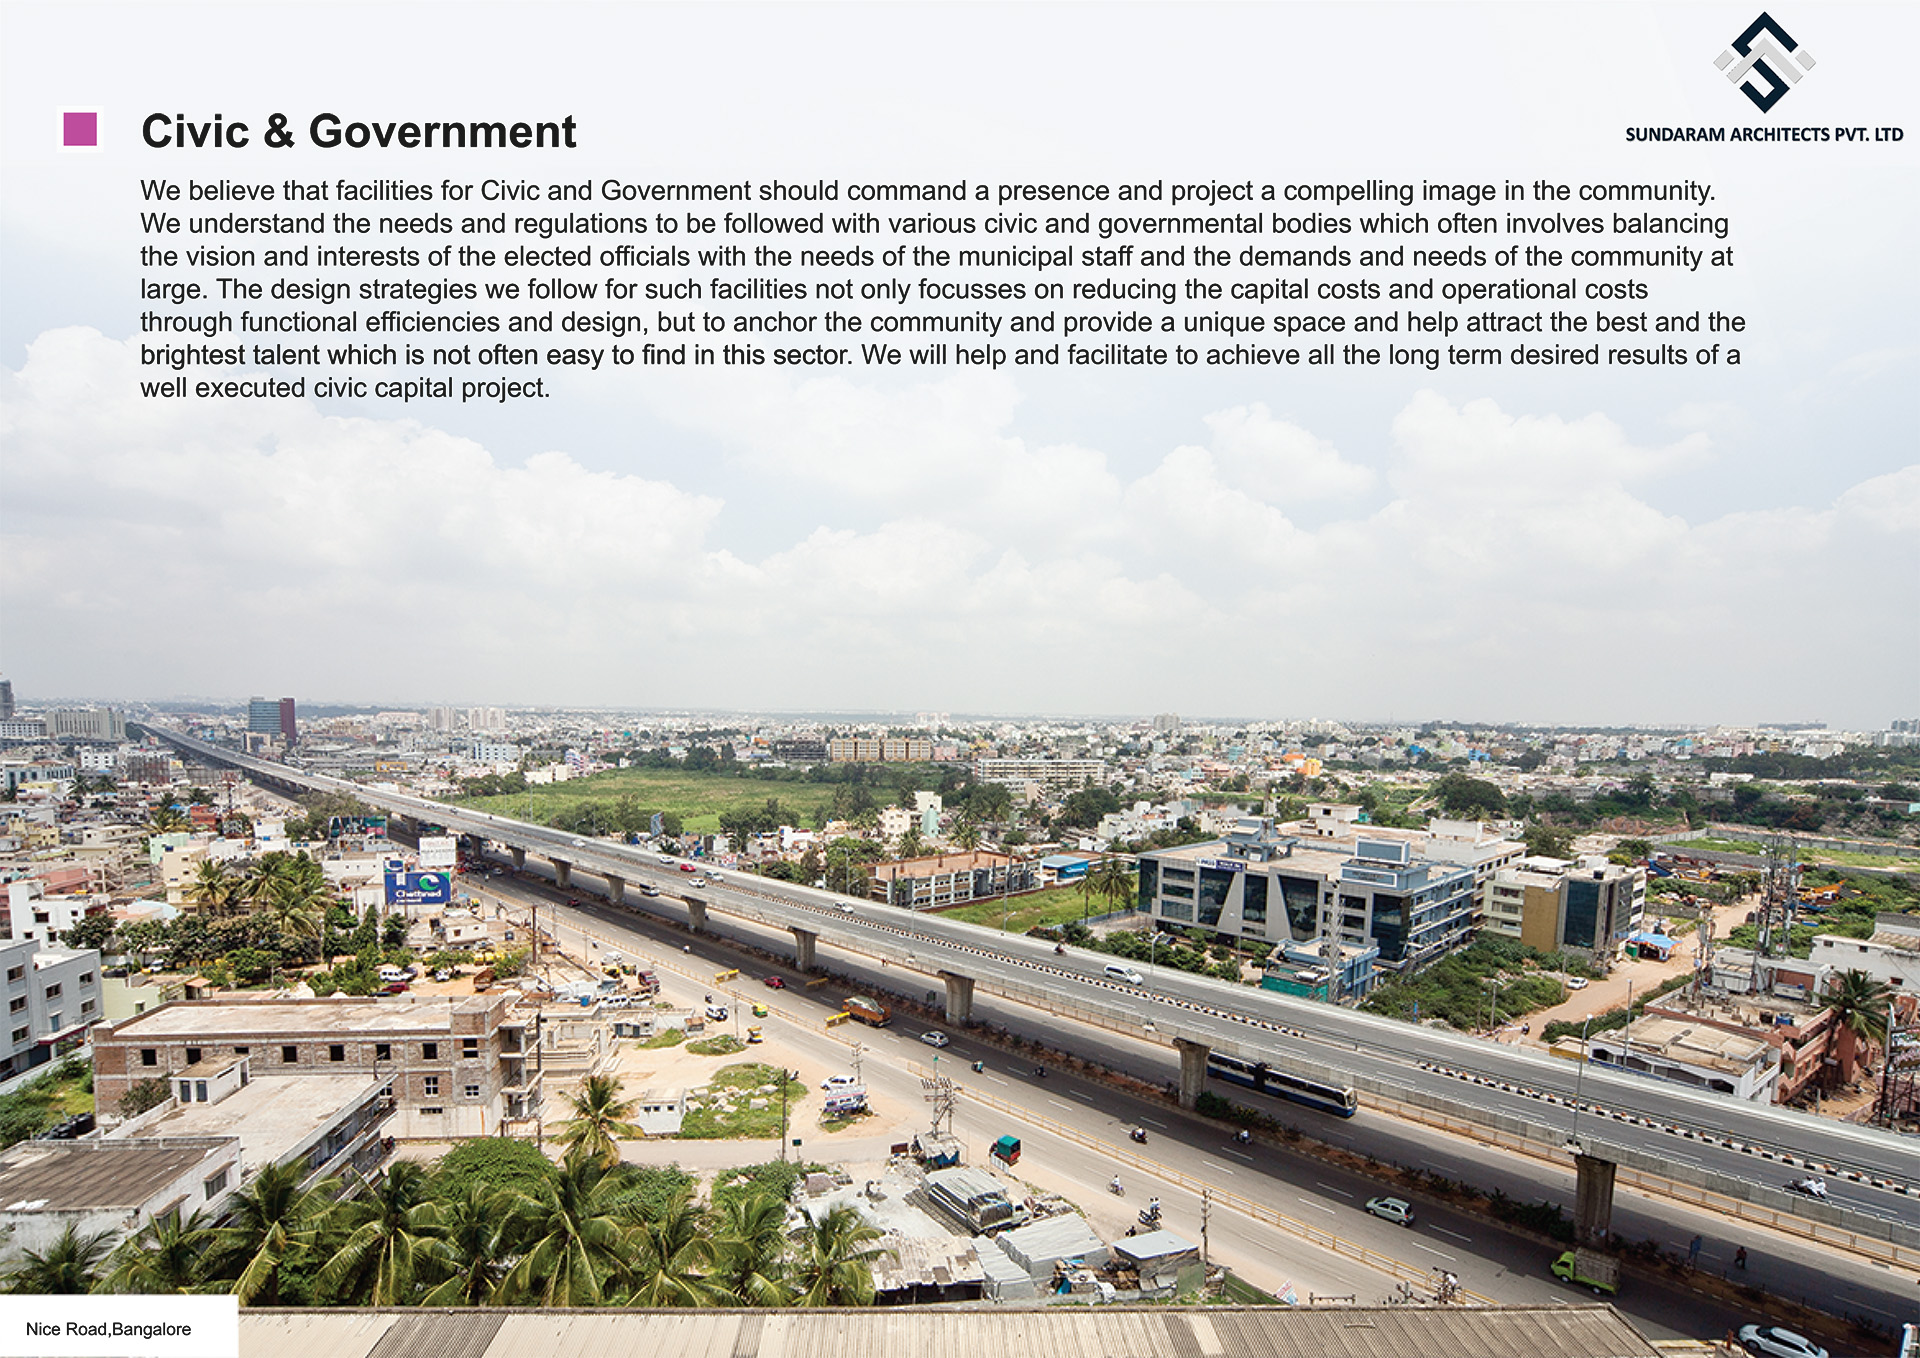 Nice Road, Bangalore - Civic & Government Design - Best Structural Design in India,Bangalore